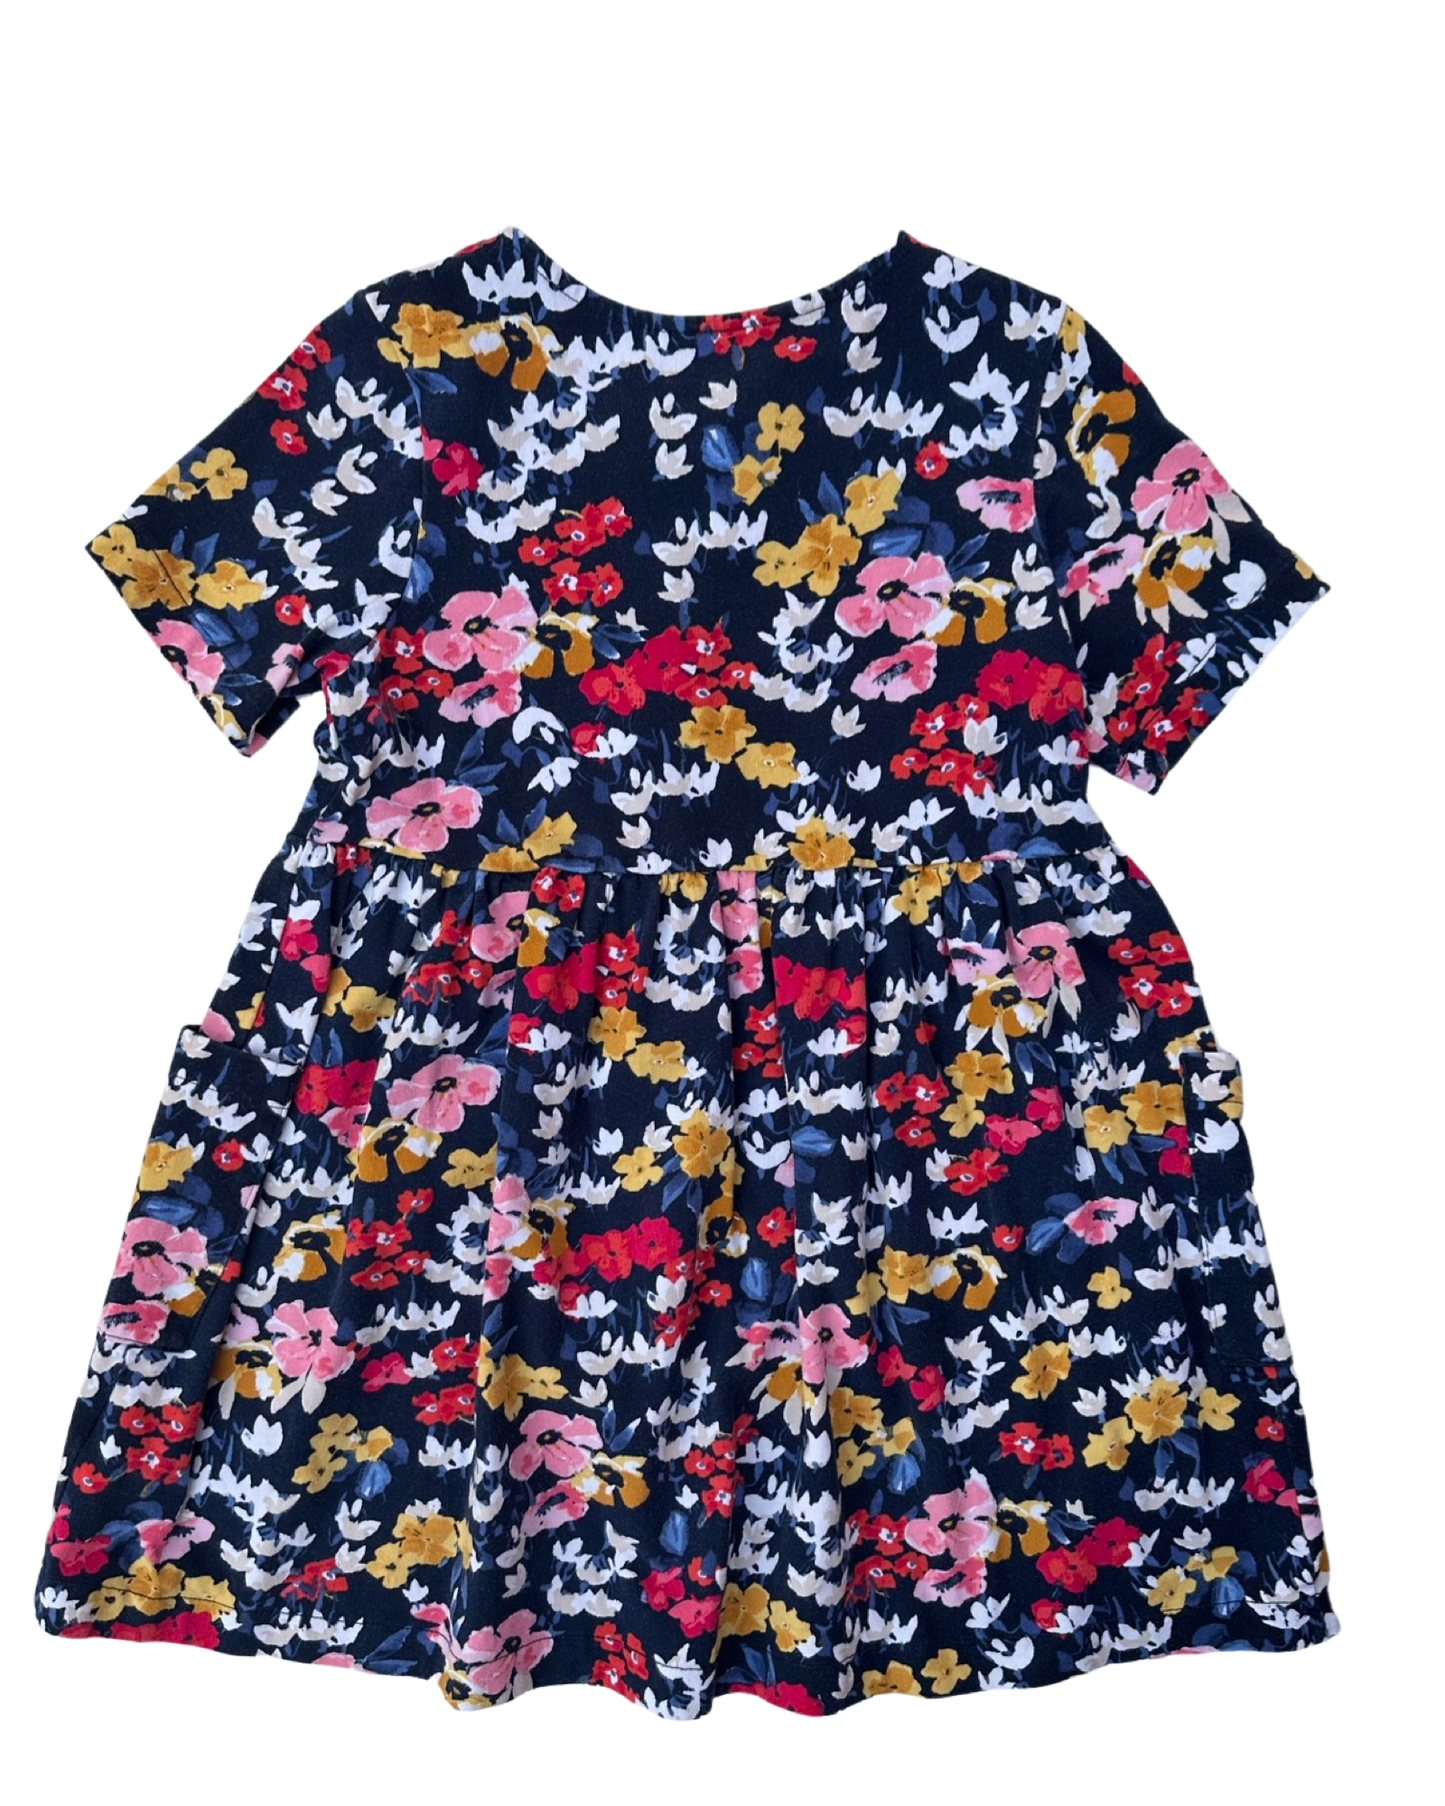 Joules floral print jersey dress (size 6yrs)